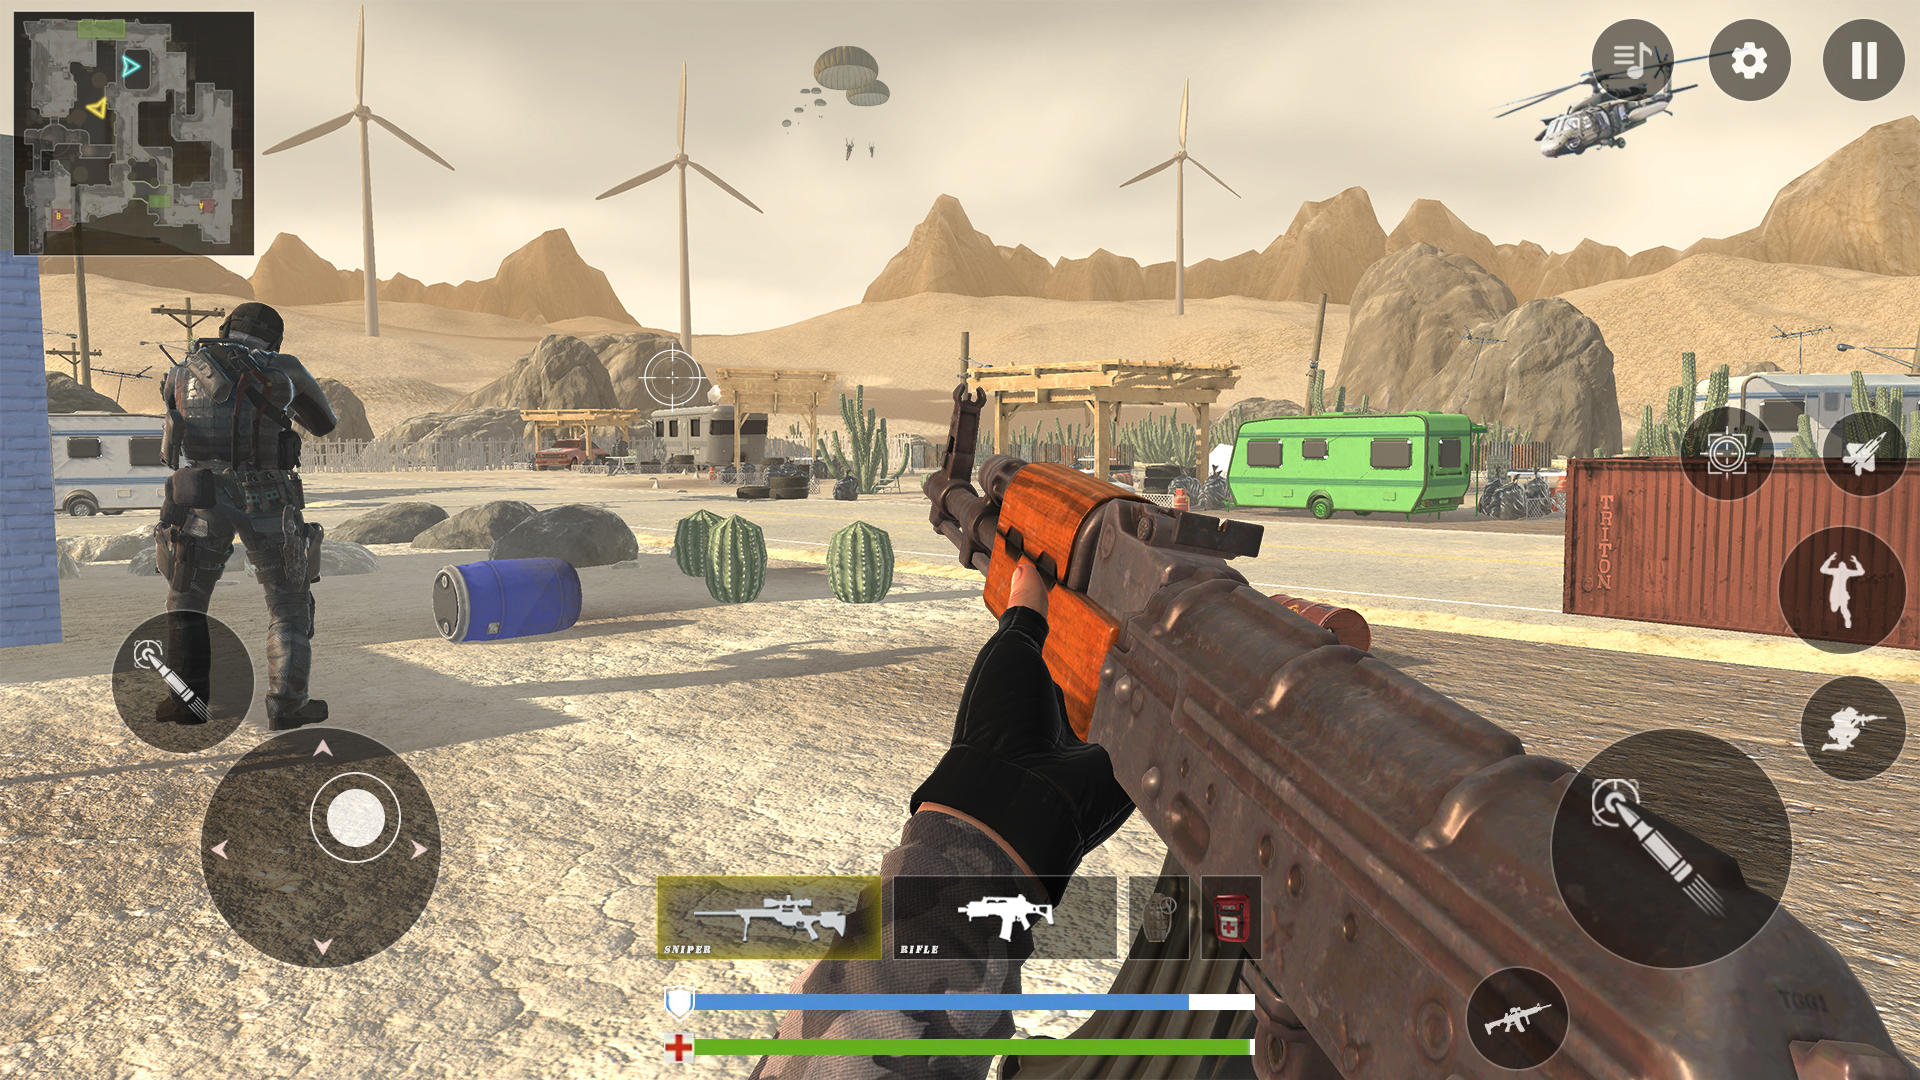 Desert Sniper 3D shooting Game APK para Android - Download